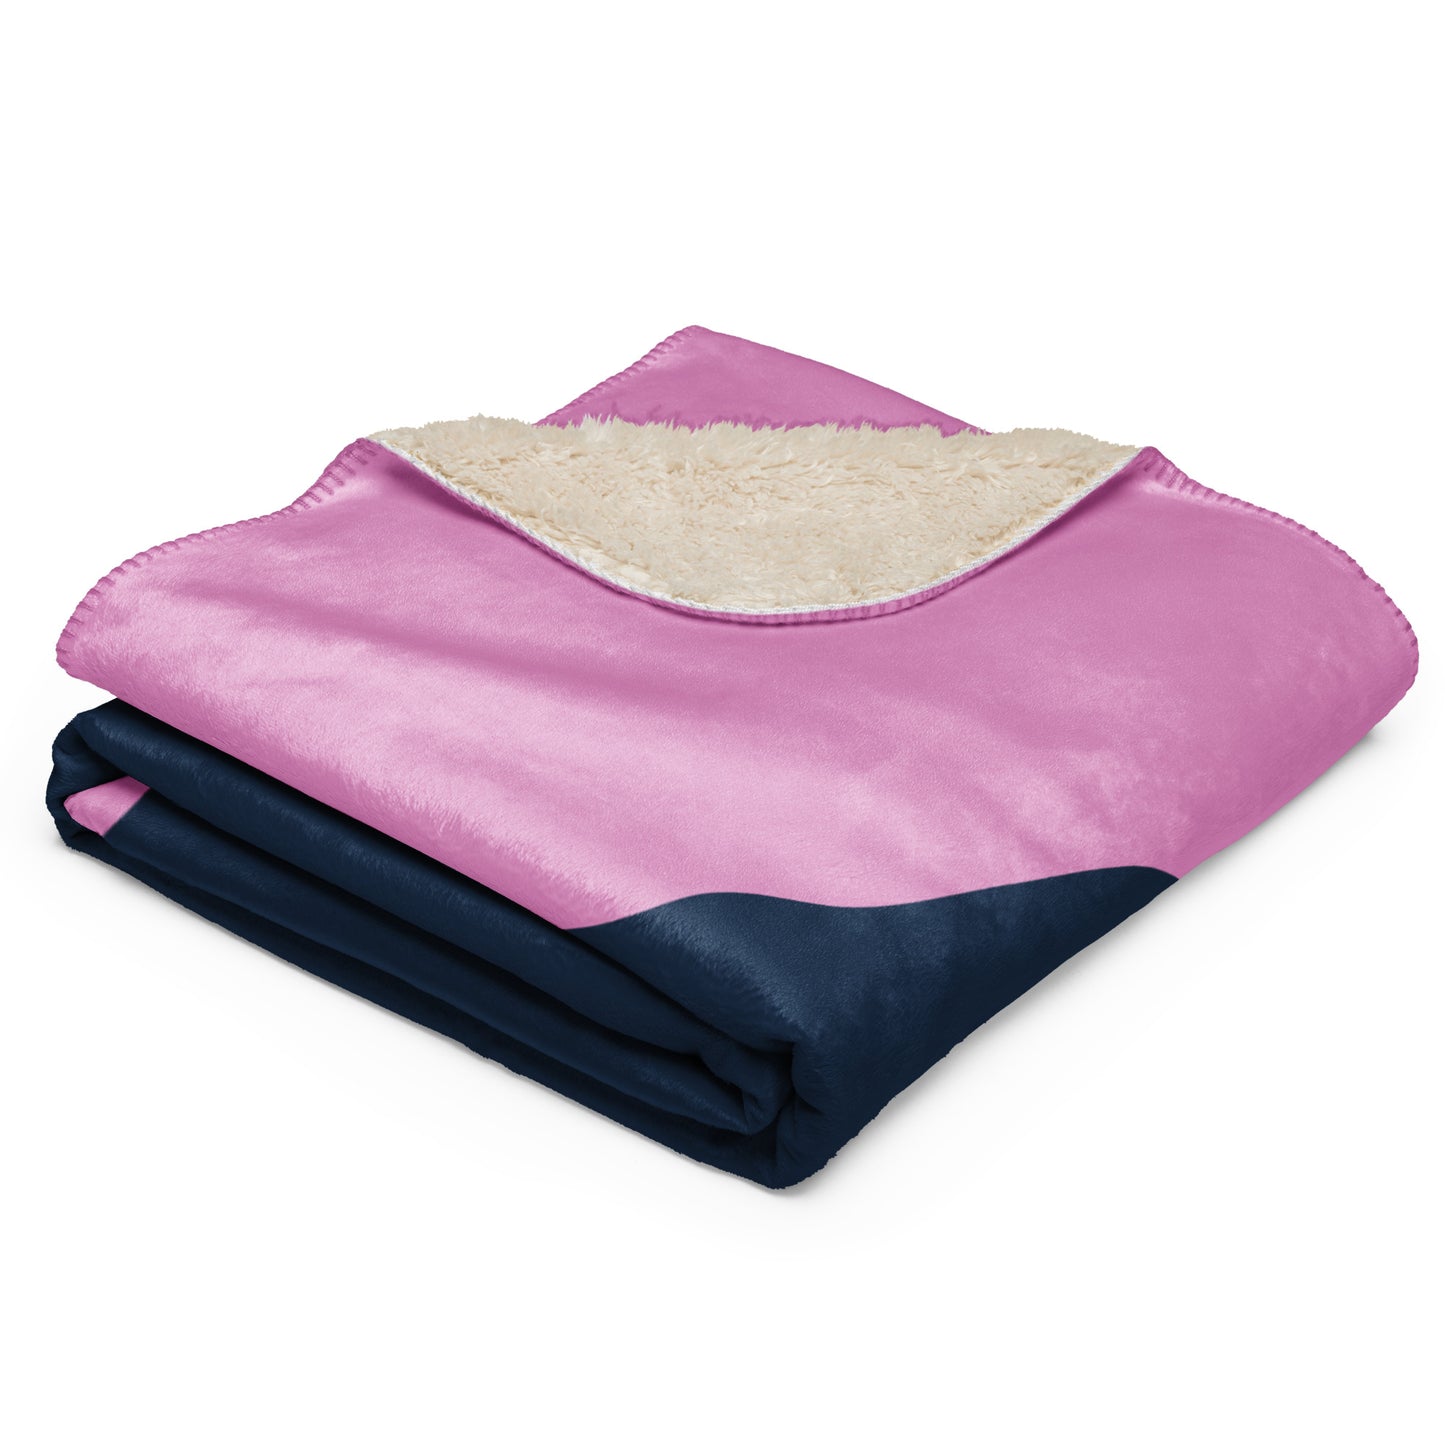 Martha's Vineyard Sherpa blanket - Navy on Pink